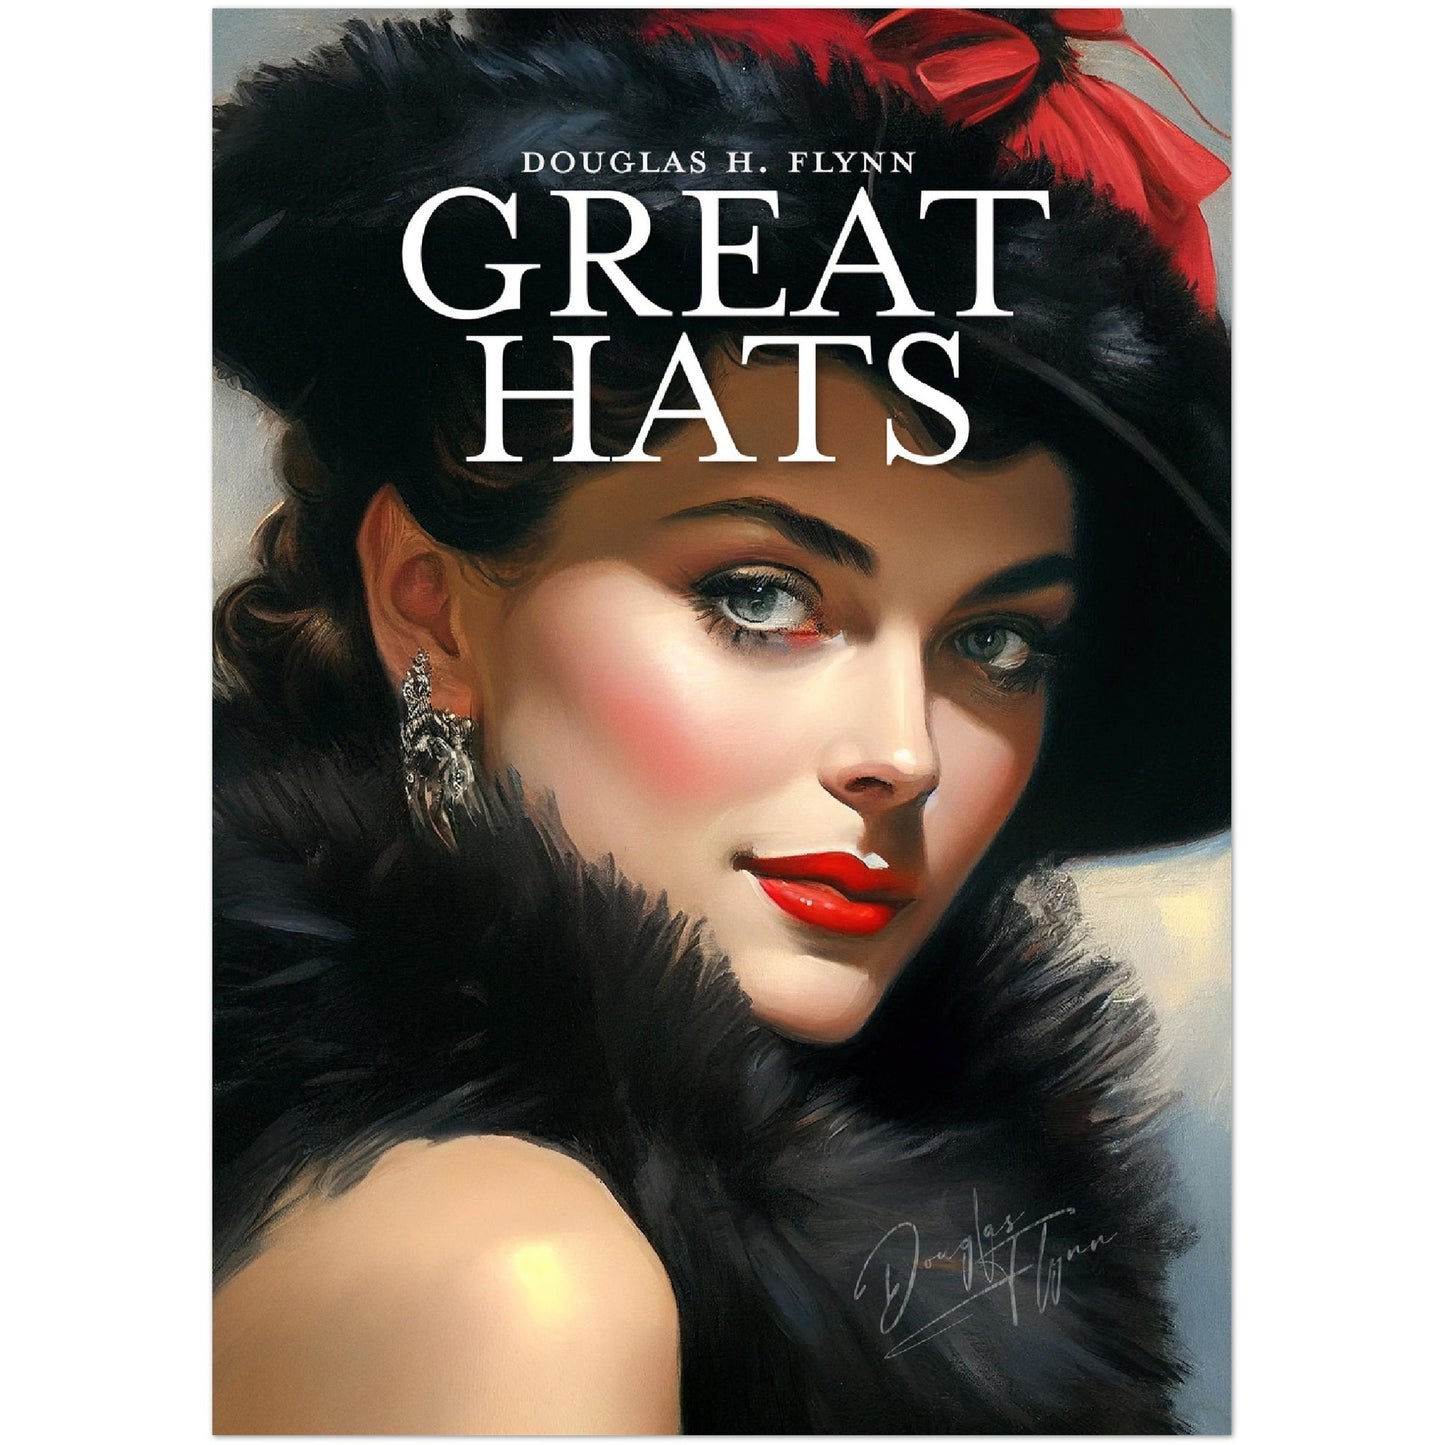 »Great Hats« merch poster